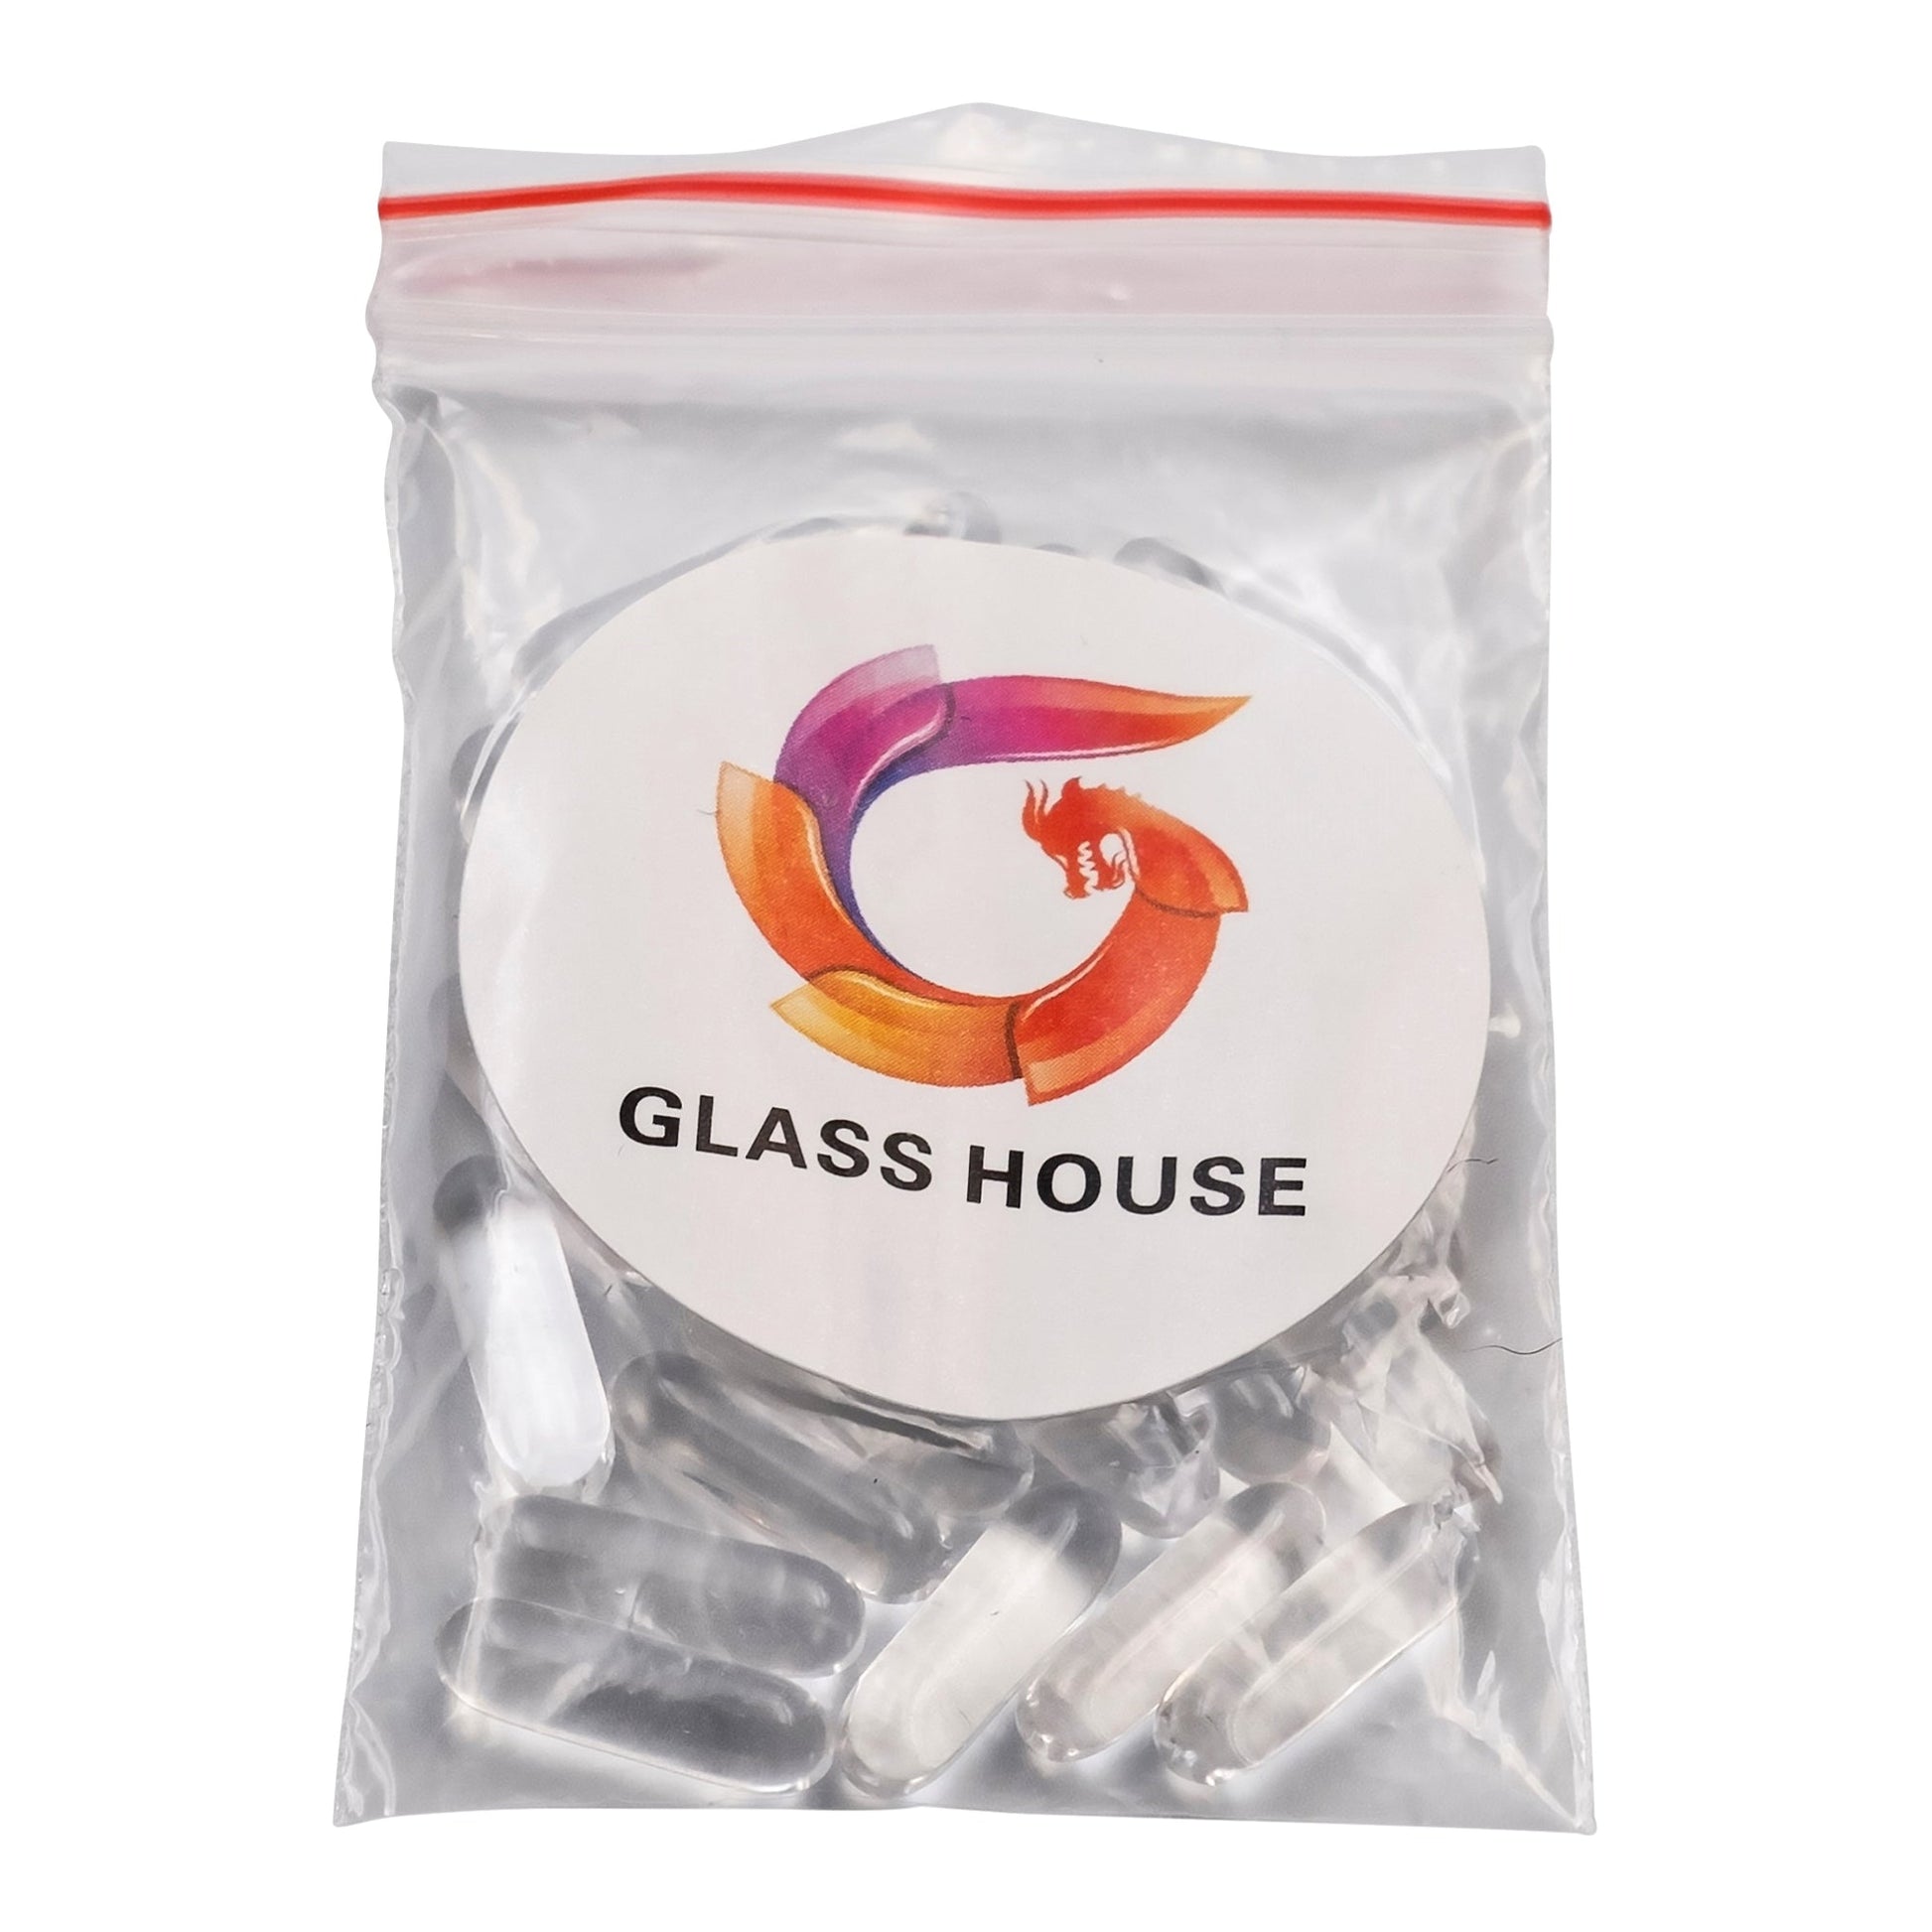 Glasshouse Quartz Capsules - 25 Pack by Glasshouse | Mission Dispensary